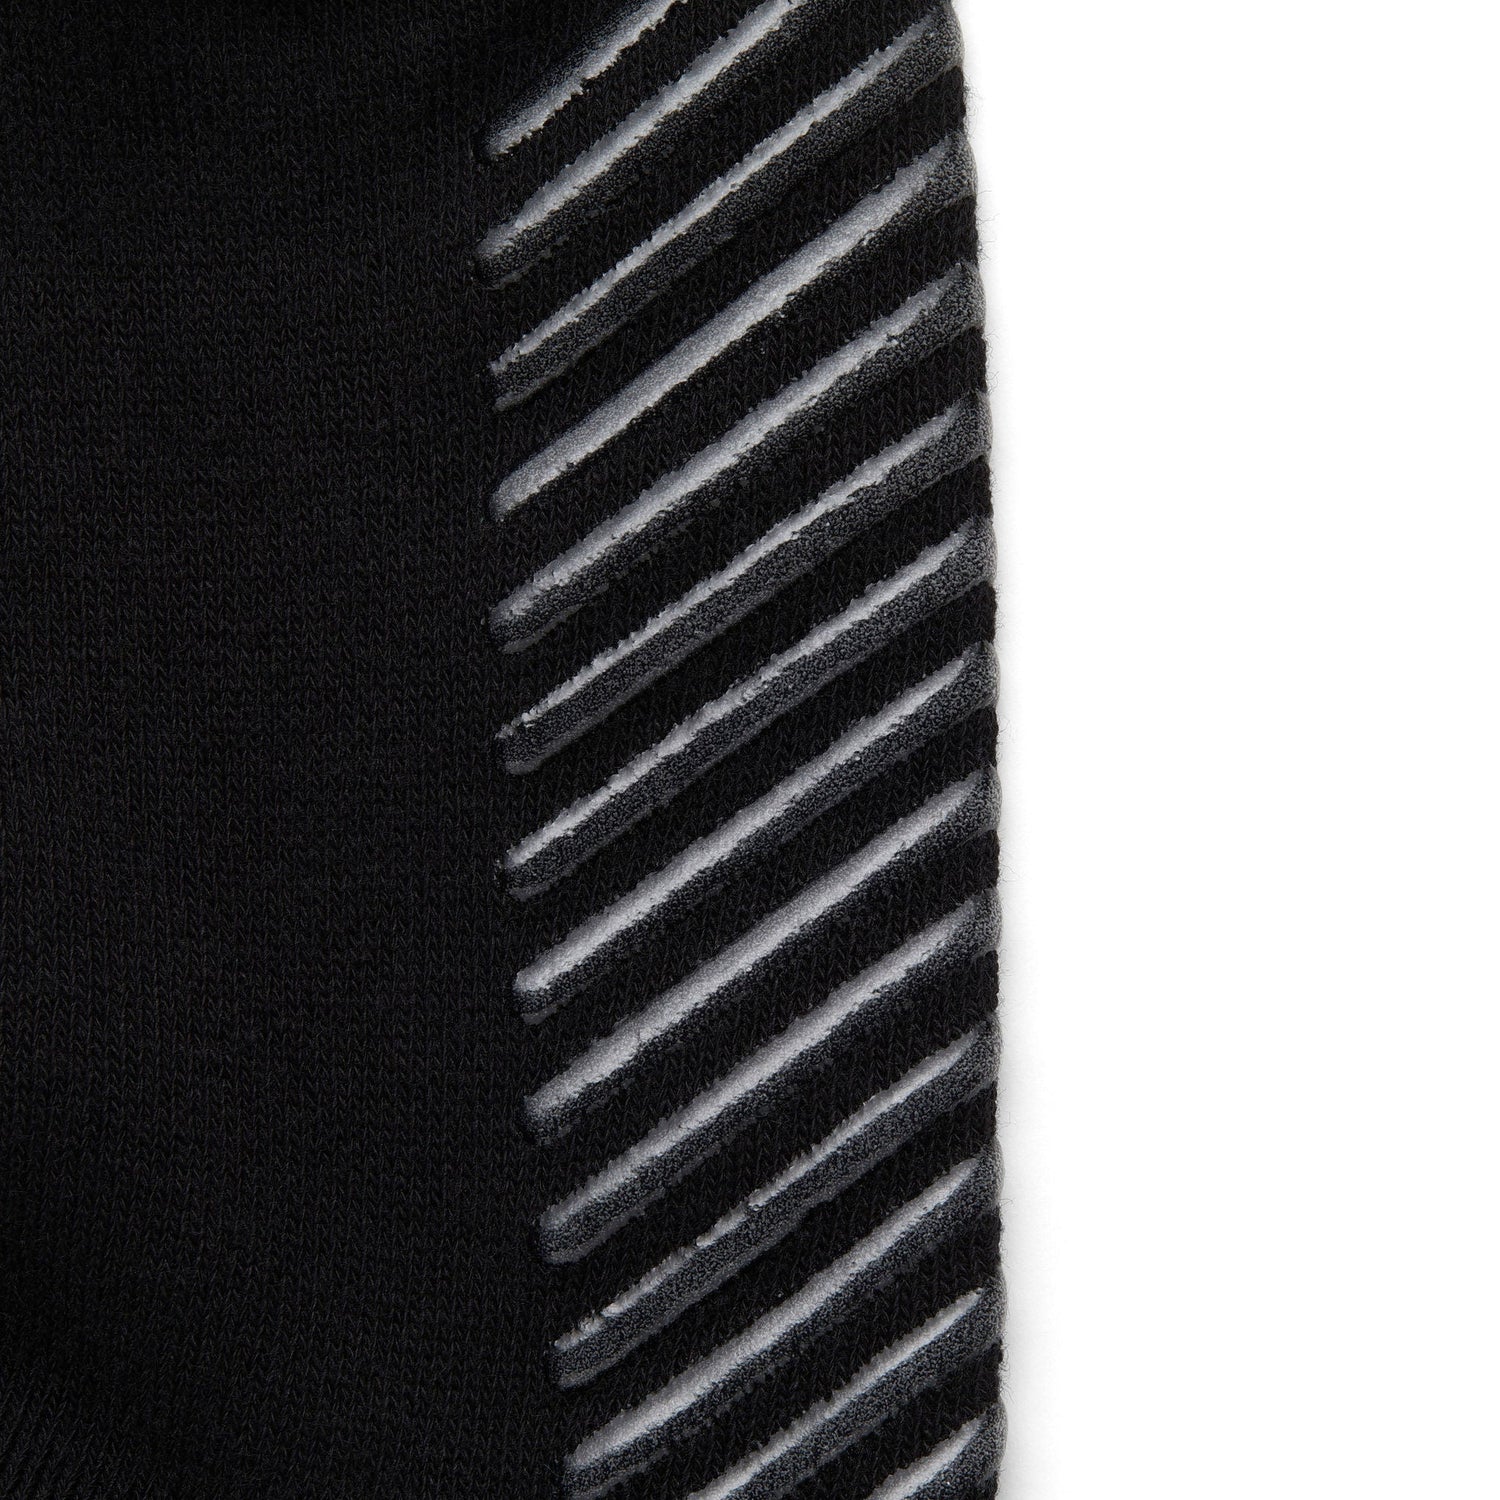 Close up of black anti slip socks with tread pattern on the bottom.